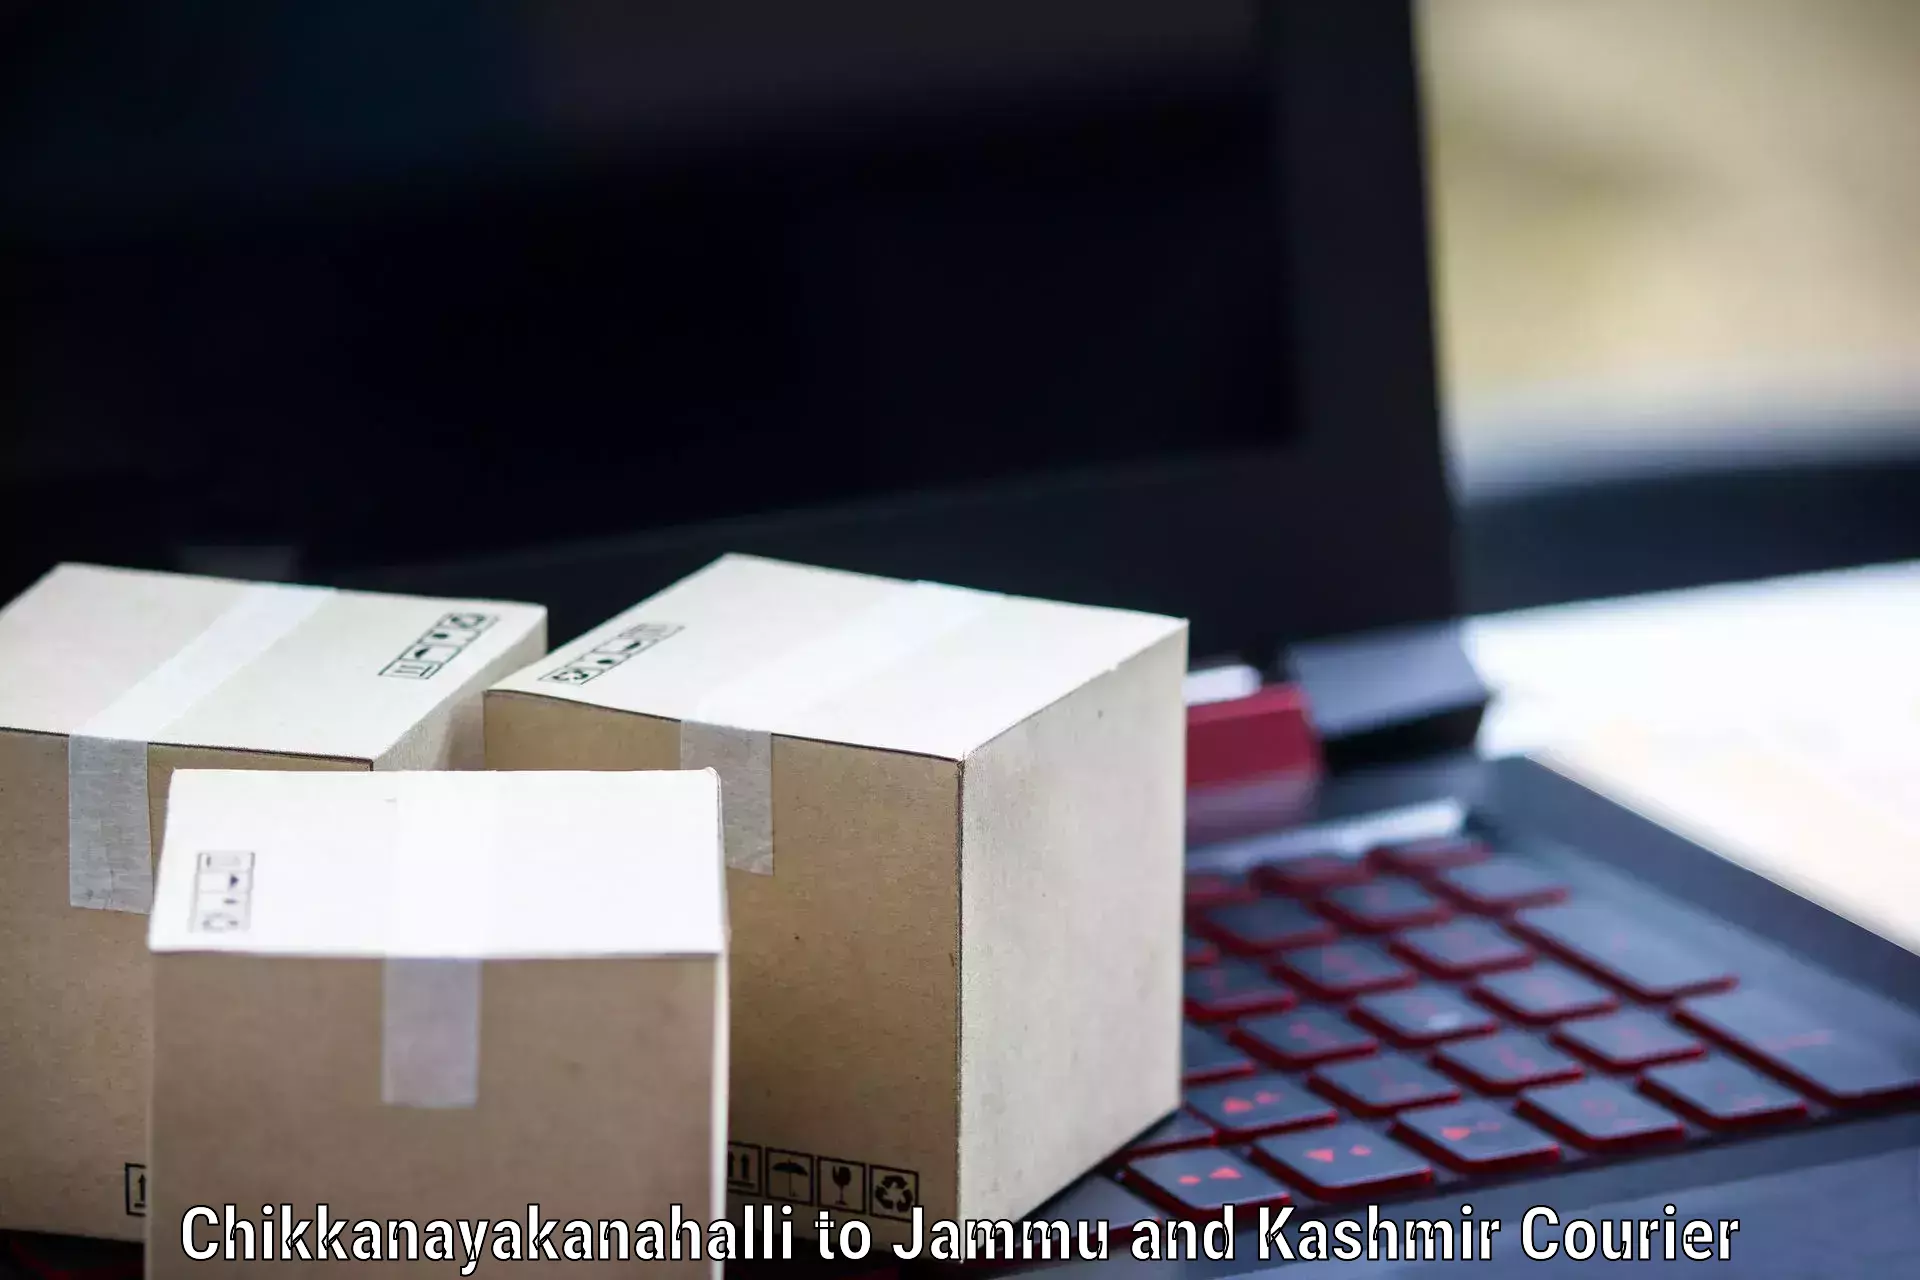 State-of-the-art courier technology Chikkanayakanahalli to Kishtwar